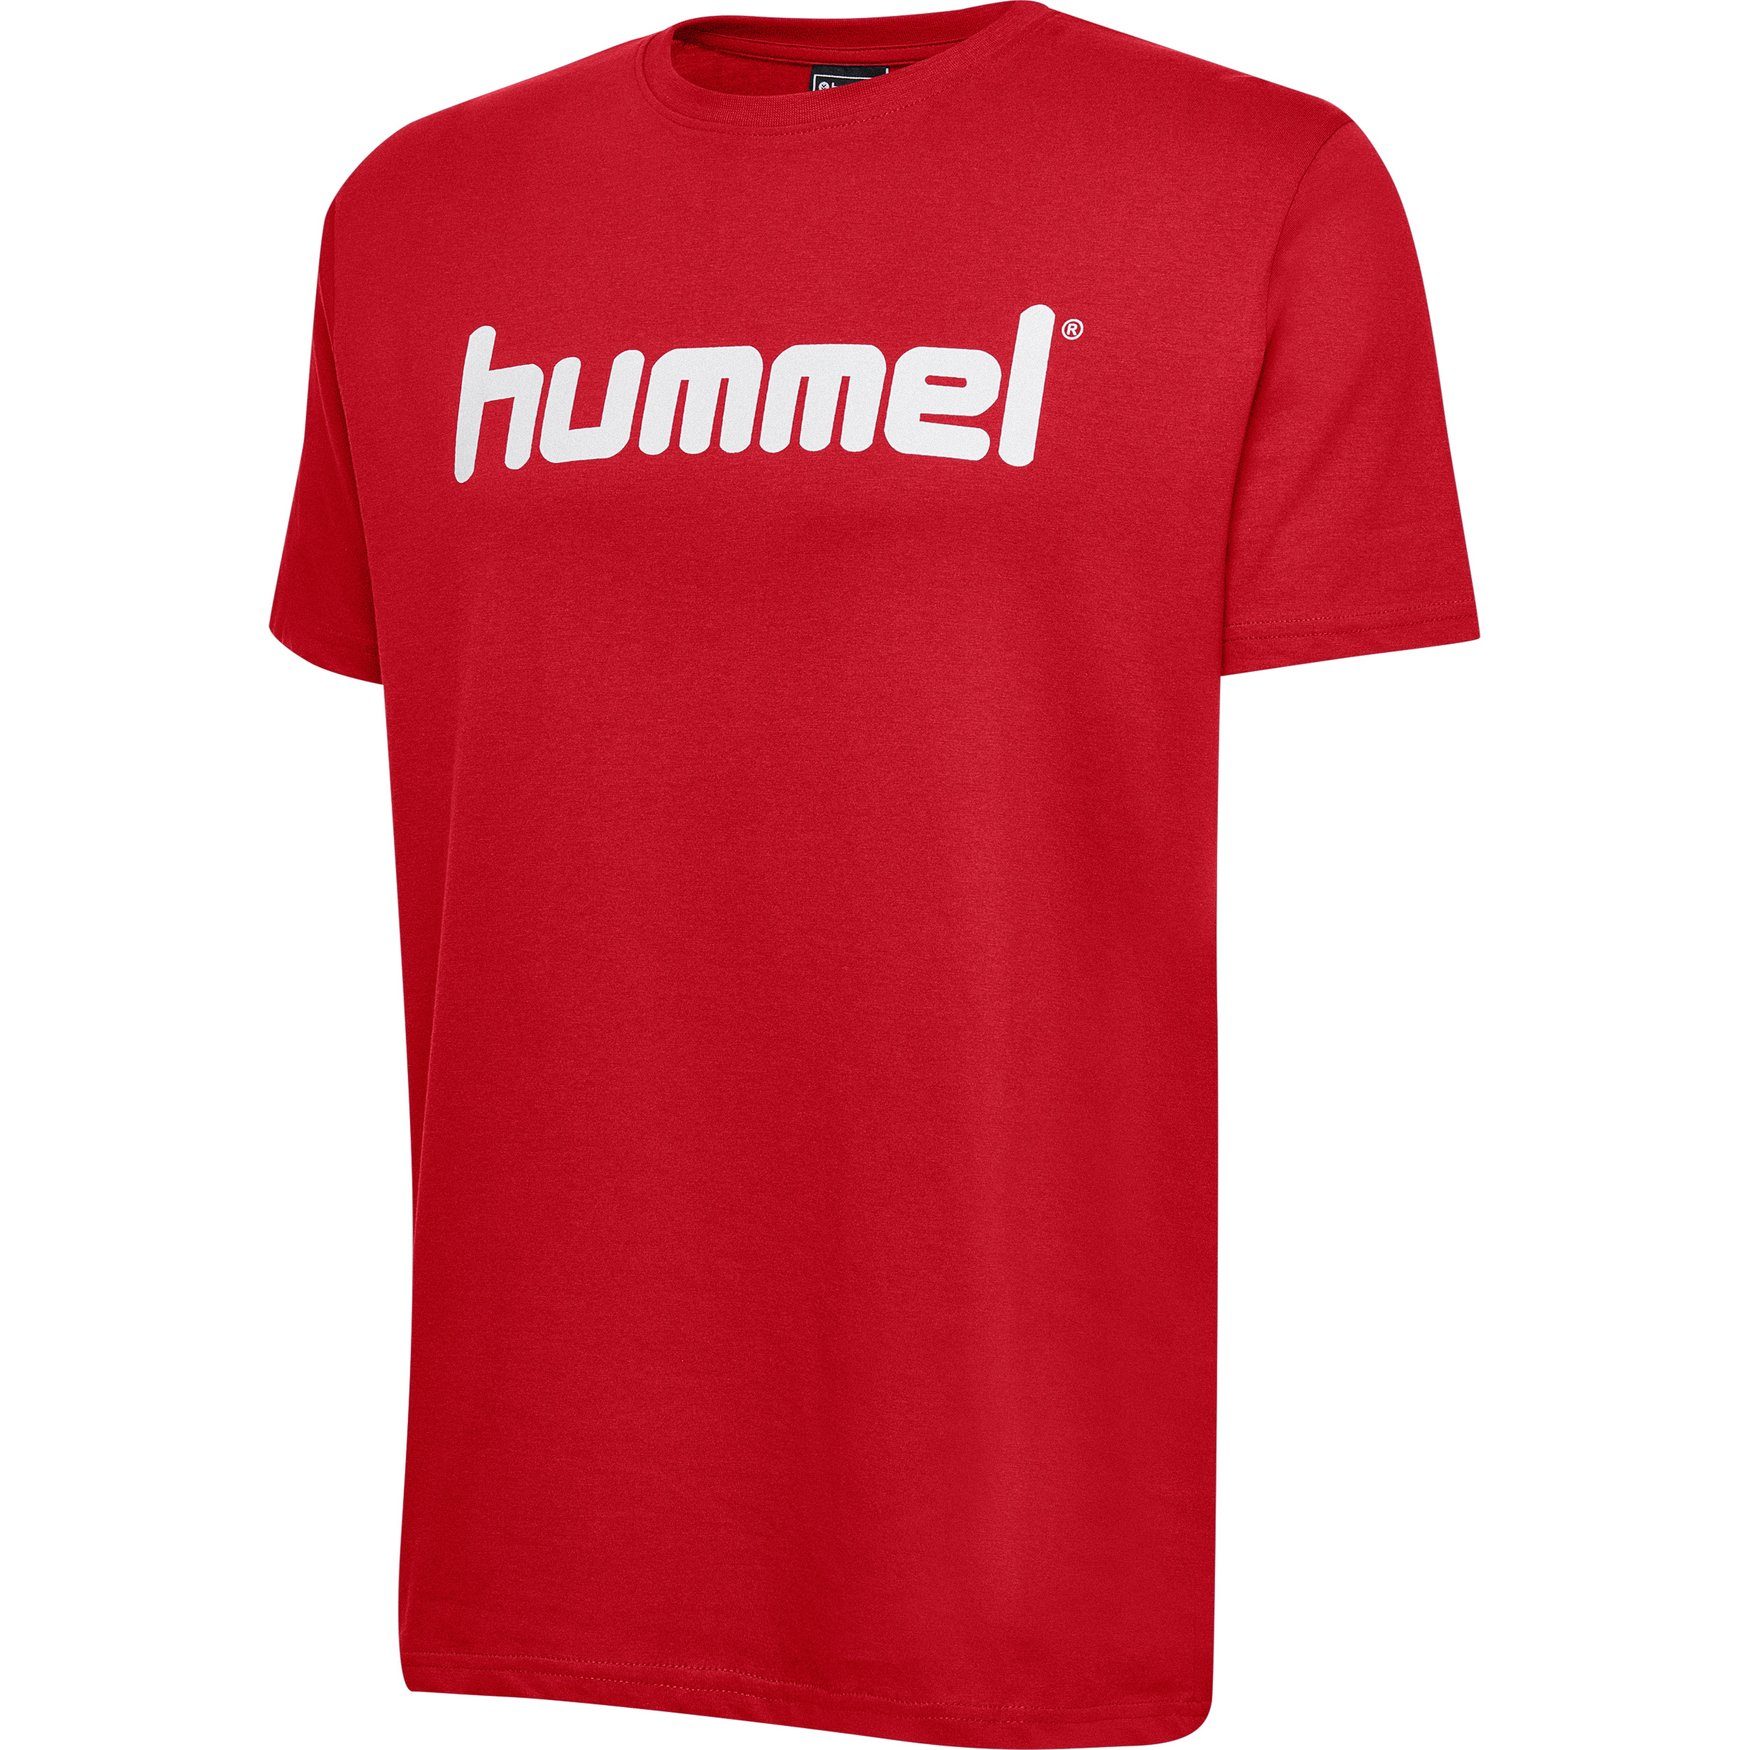 aus Logo hummel T-Shirt Kurzarm Rot 5125 Sport HMLGO Shirt Baumwolle T-Shirt Rundhals in